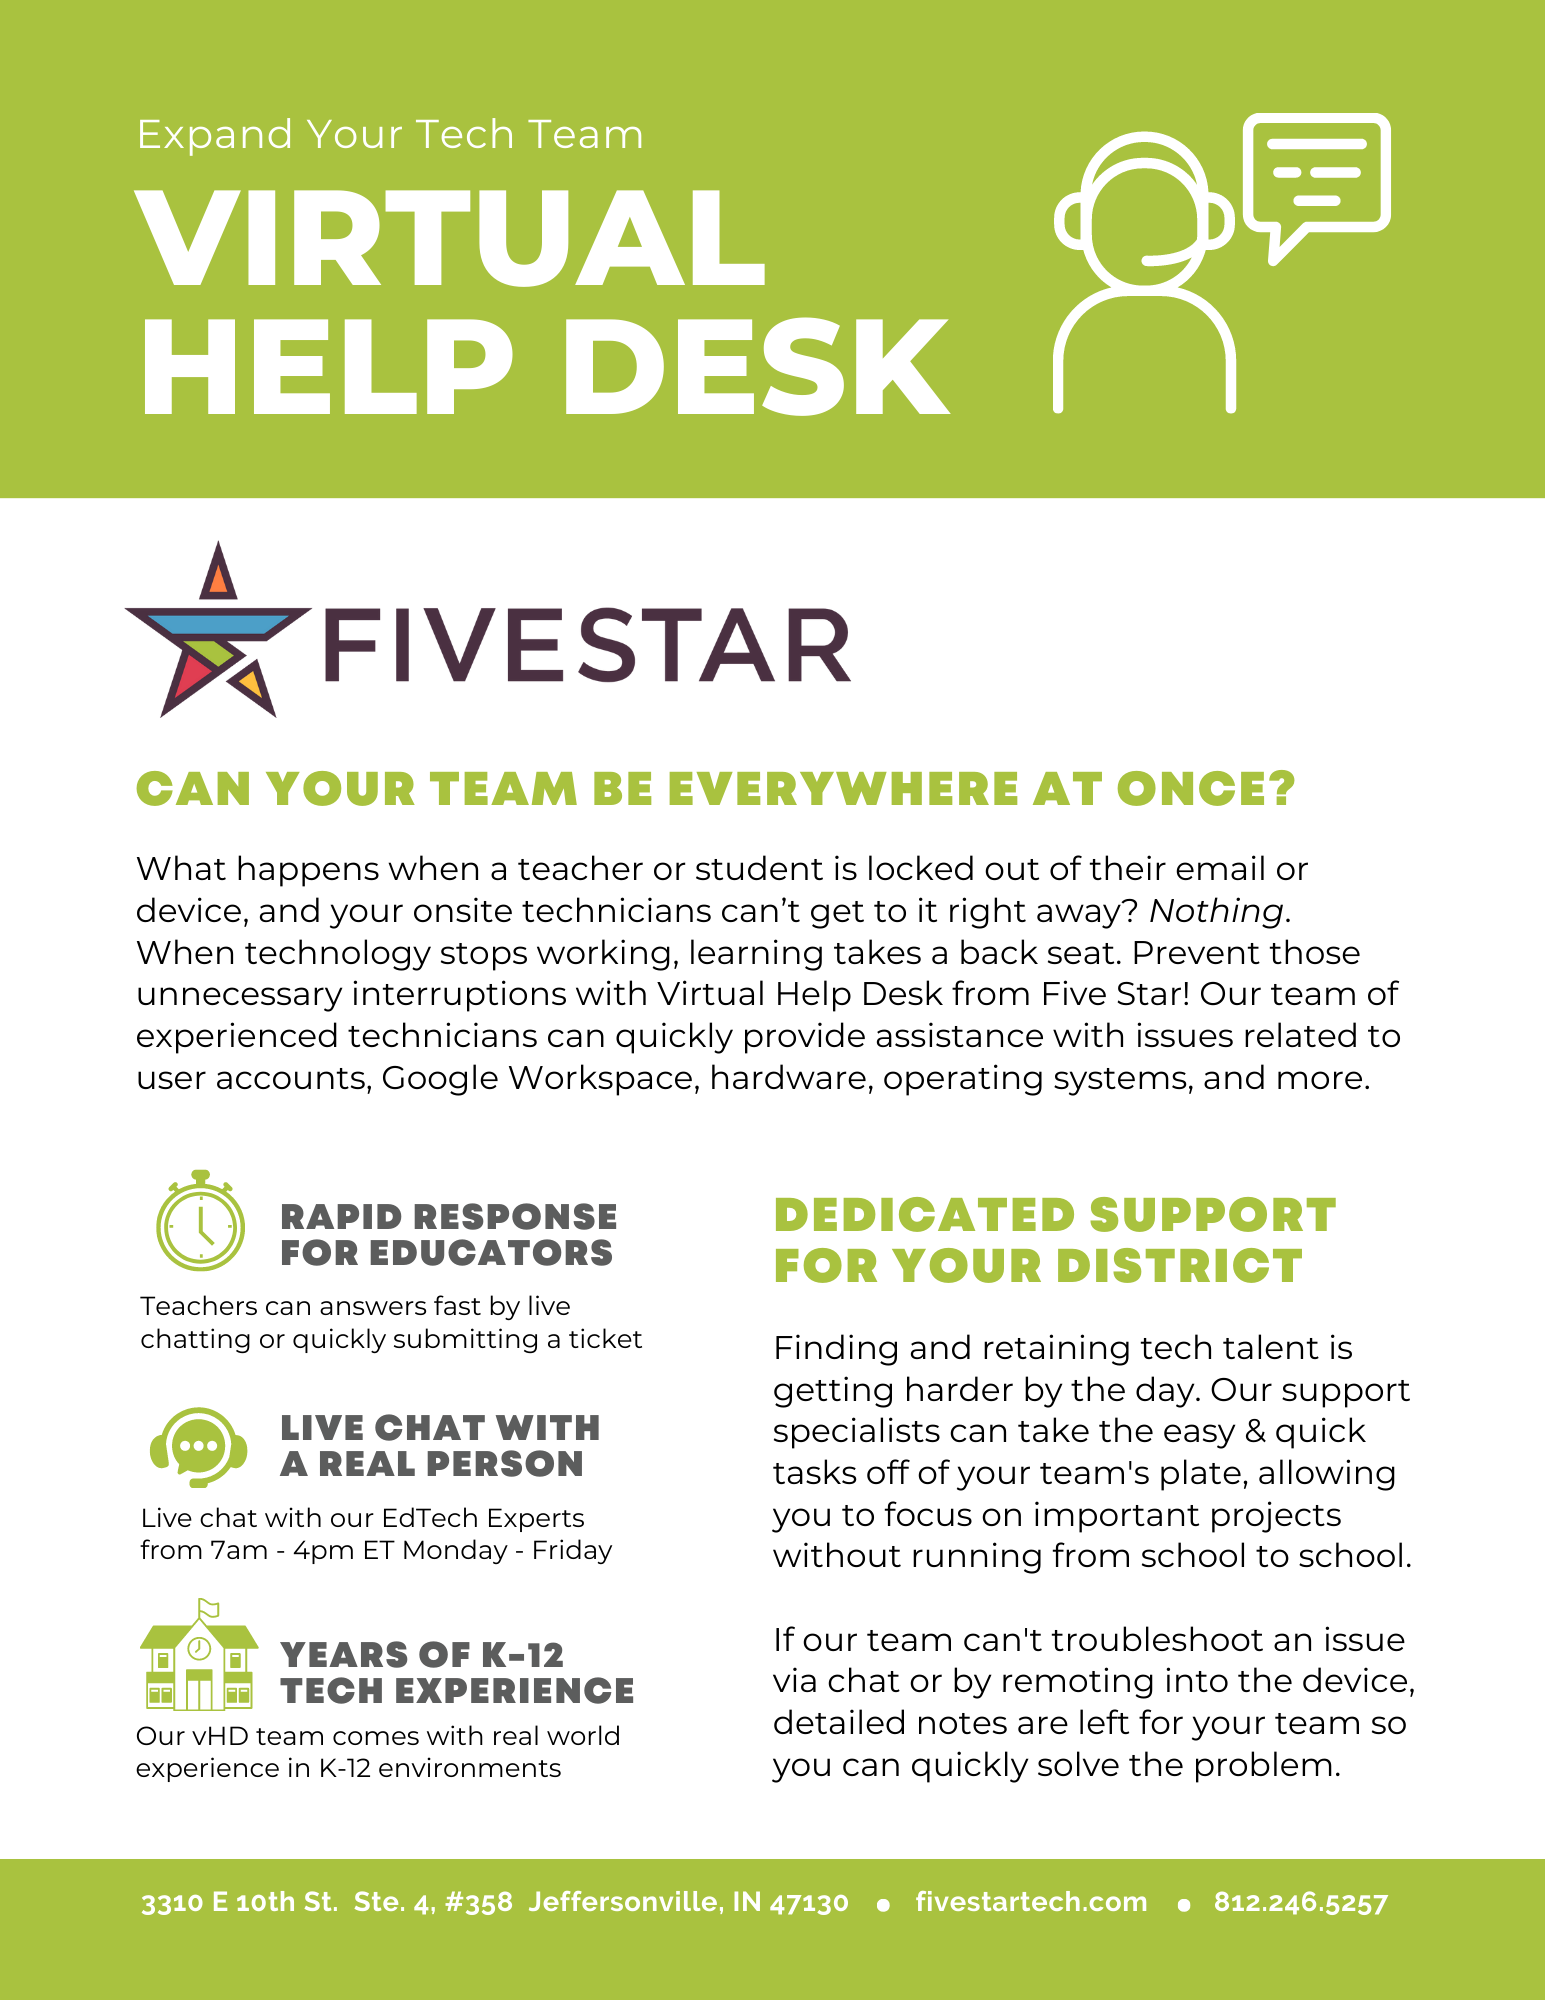 Virtual Help Desk by Five Star